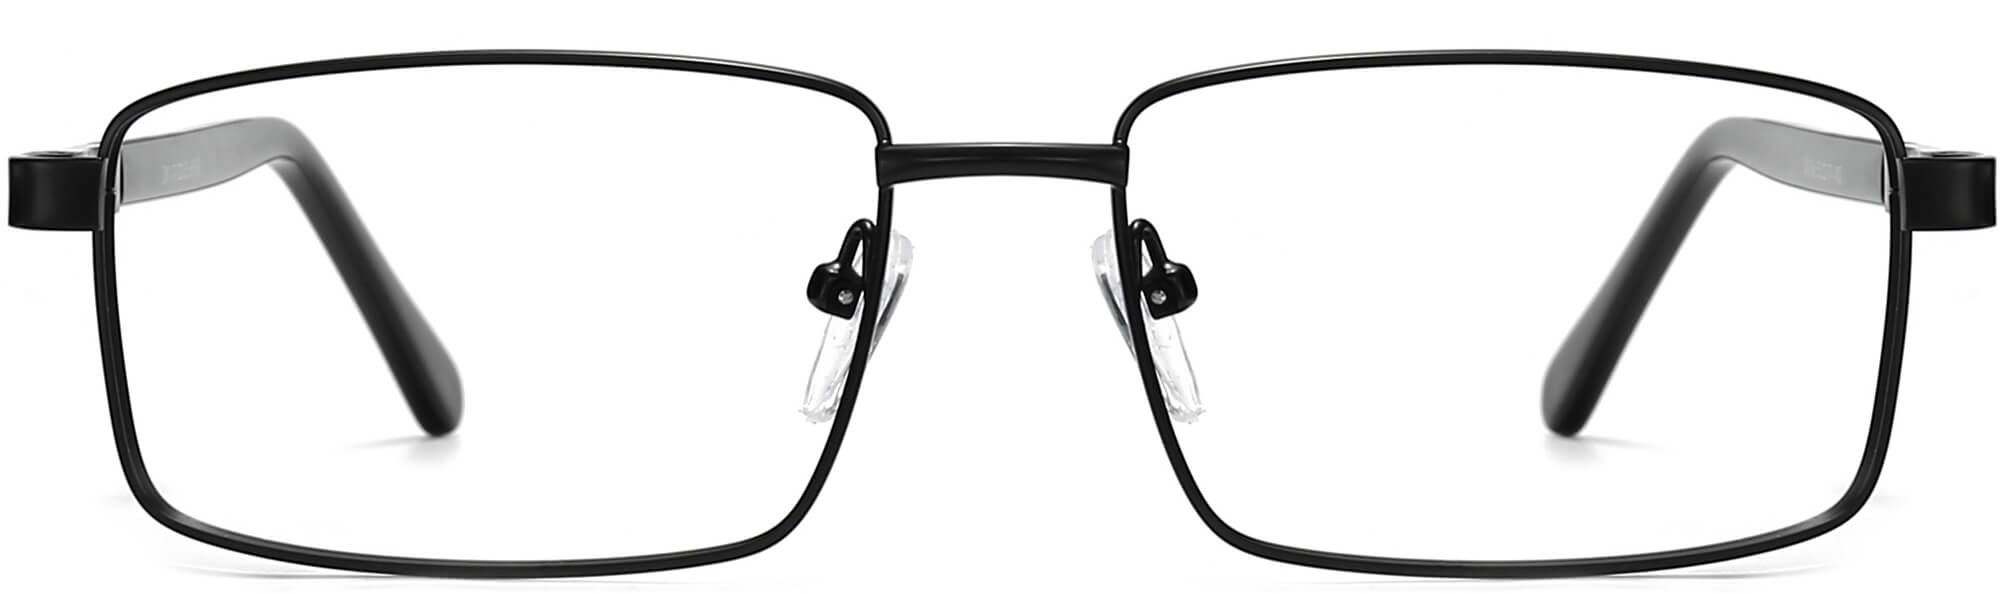 Yaretzi Square Black Eyeglasses from ANRRI, front view